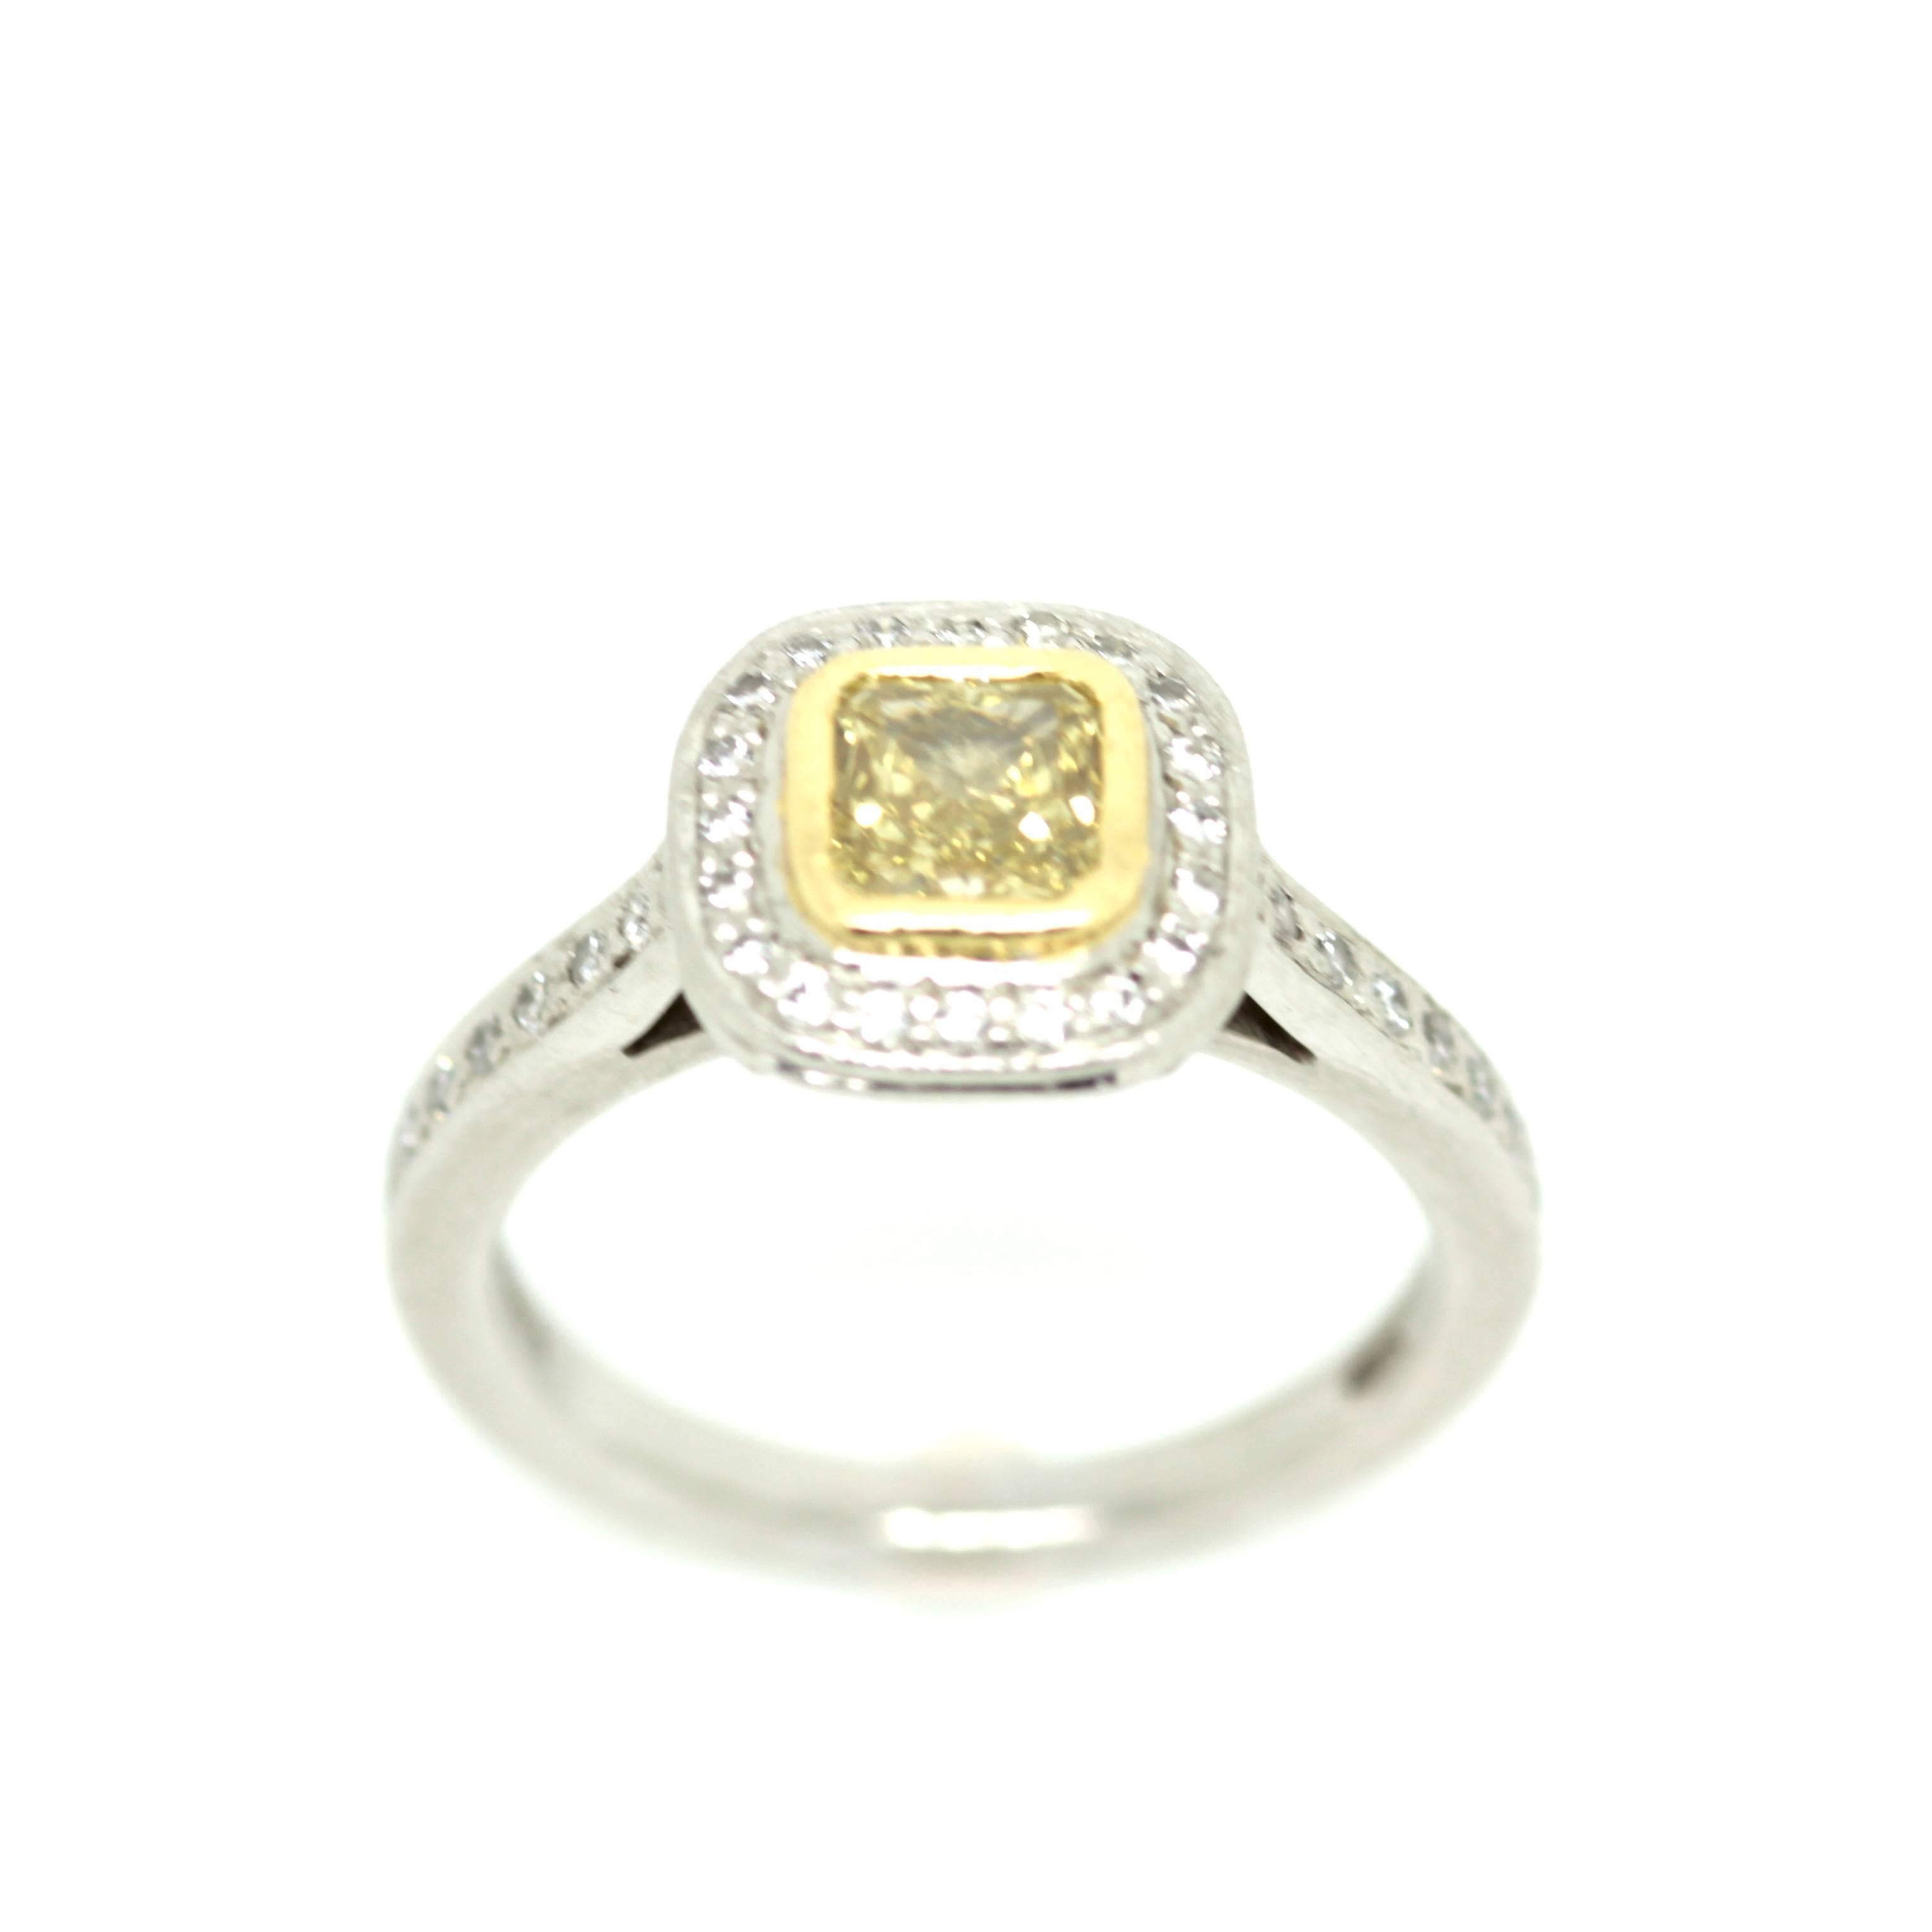 A 0.66ct Square modified brilliant, fancy intense yellow, VS2 clarity, GIA certified diamond, set in a platinum diamond cluster setting. Circa: recent 
